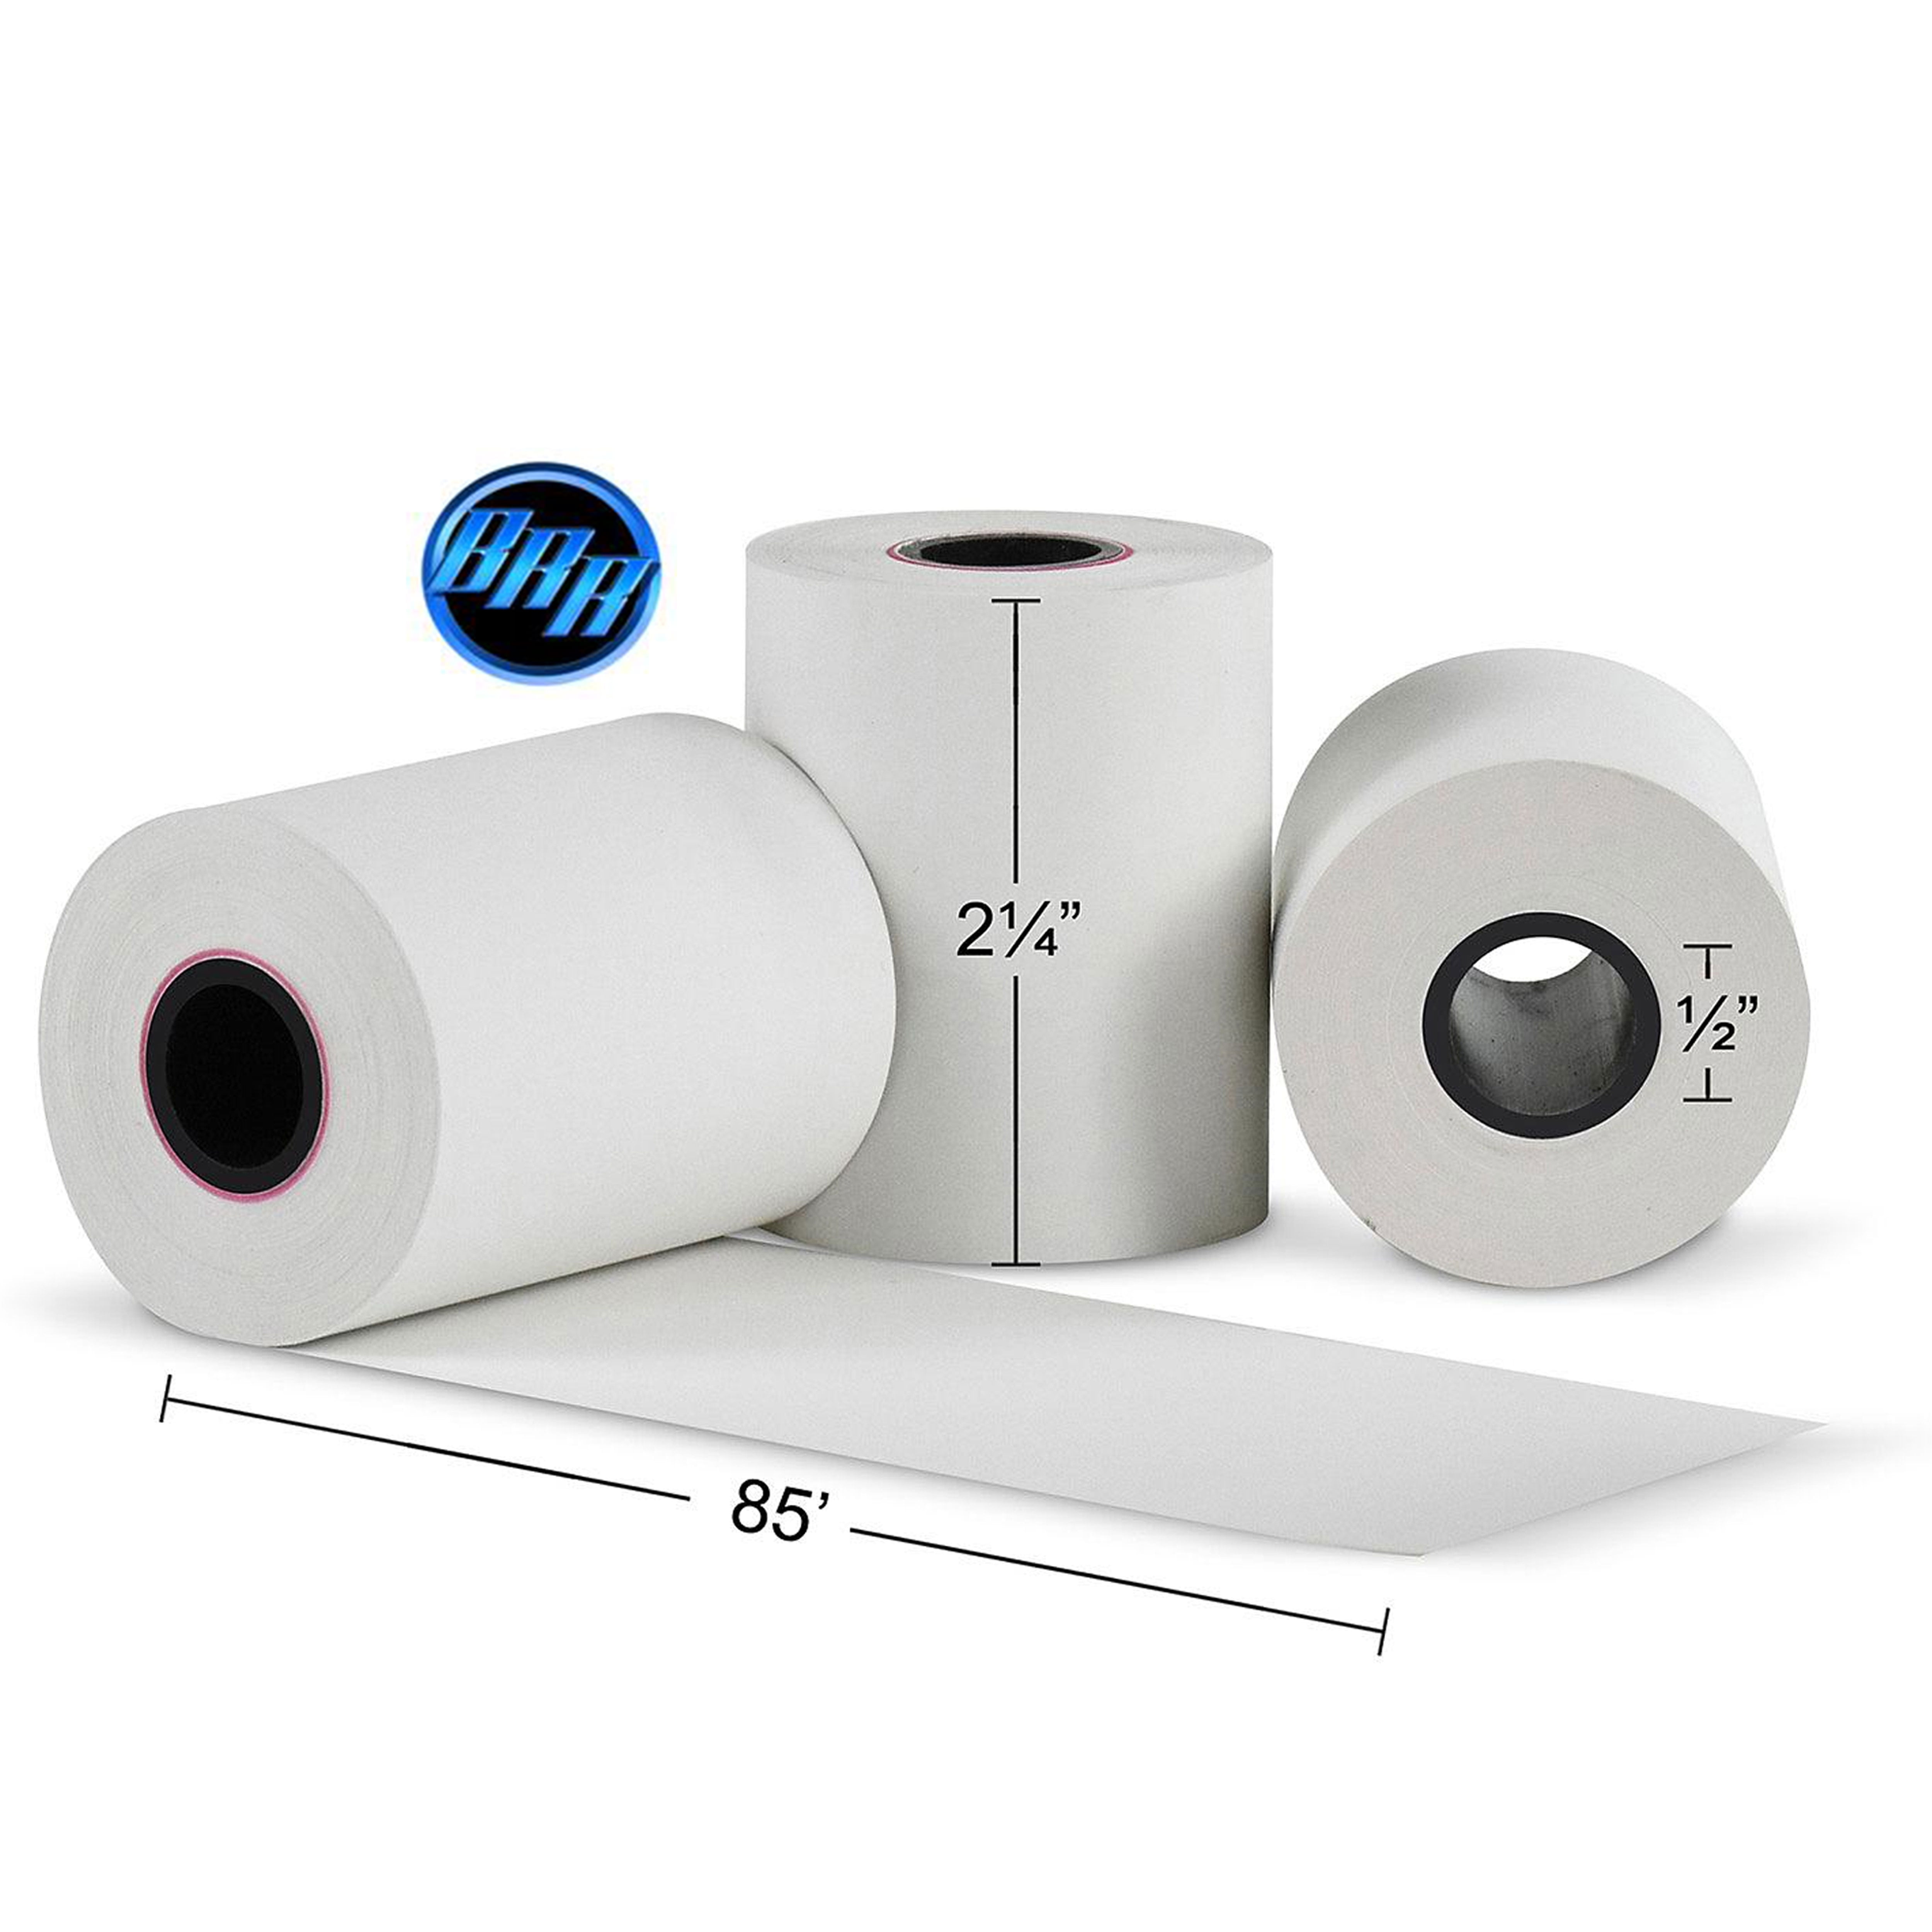 50 Rolls Reseller thermal paper rolls 2 1 4 x 85 Blank Tabs Vx510 Vx570 FD50 T4220 Thermal Paper BPA Free 